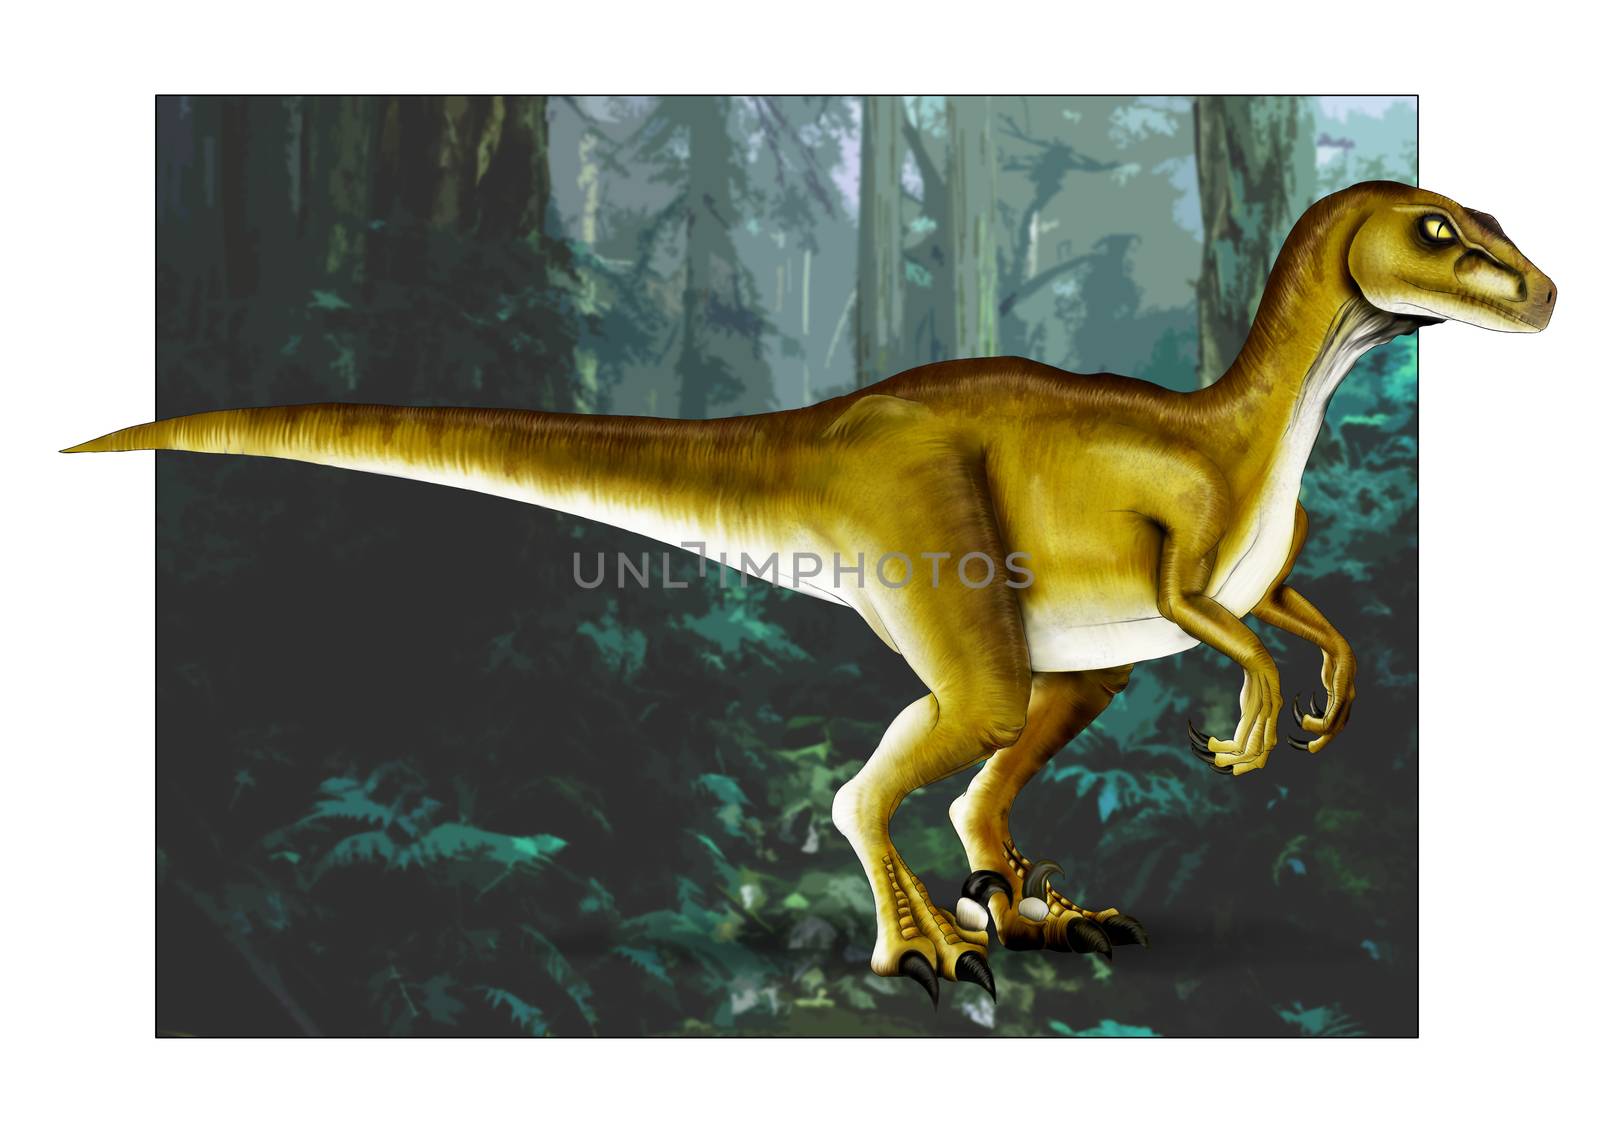 velociraptor dinosaur illustration drawn comic style